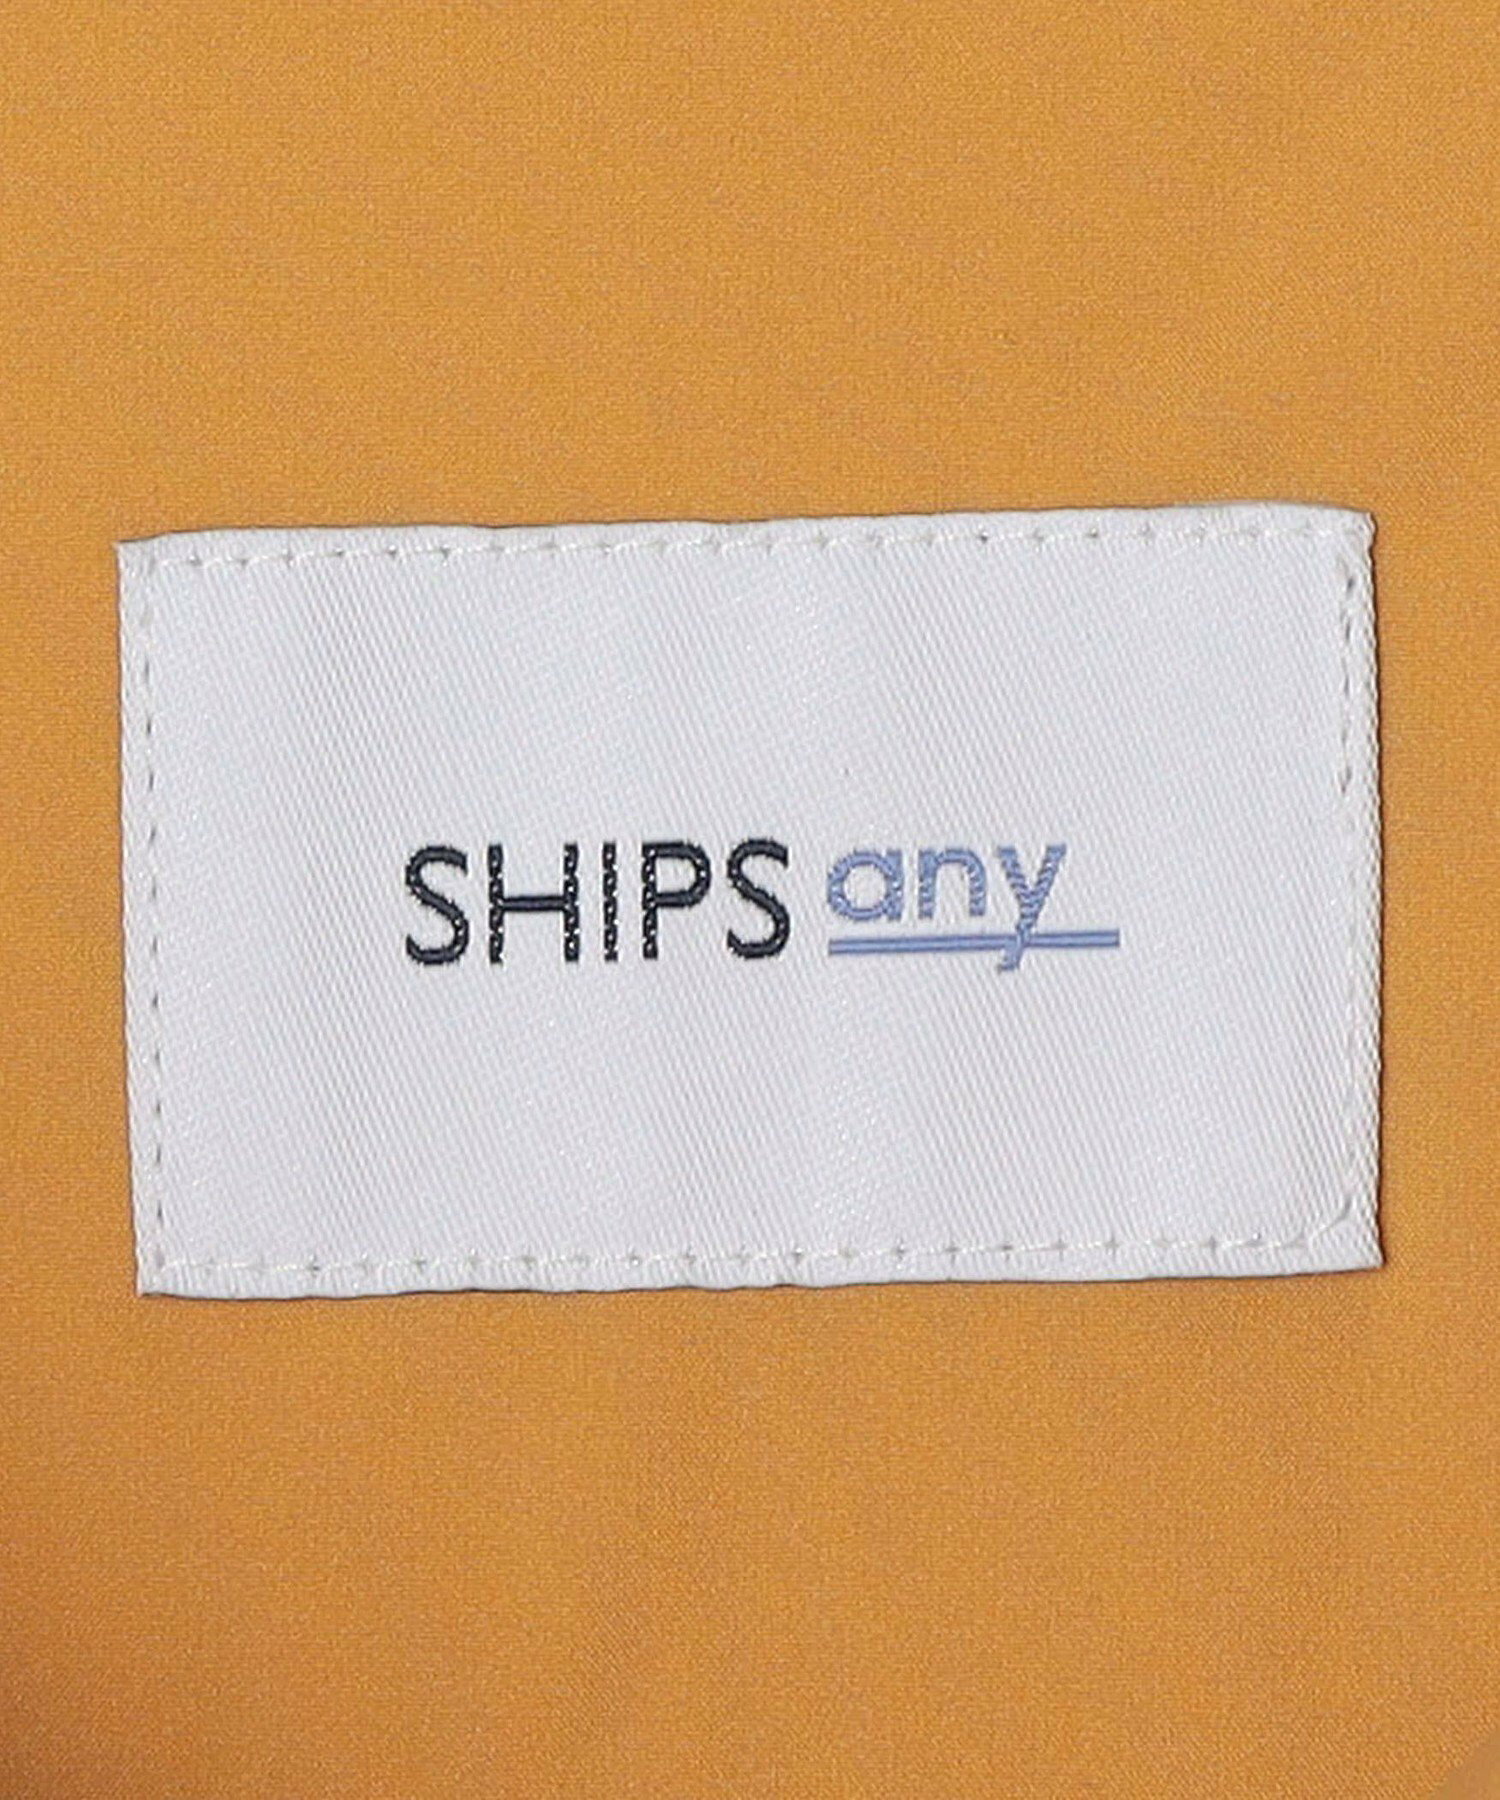 SHIPS any: <撥水・防風等>多機能 フード ダウン ブルゾン◇